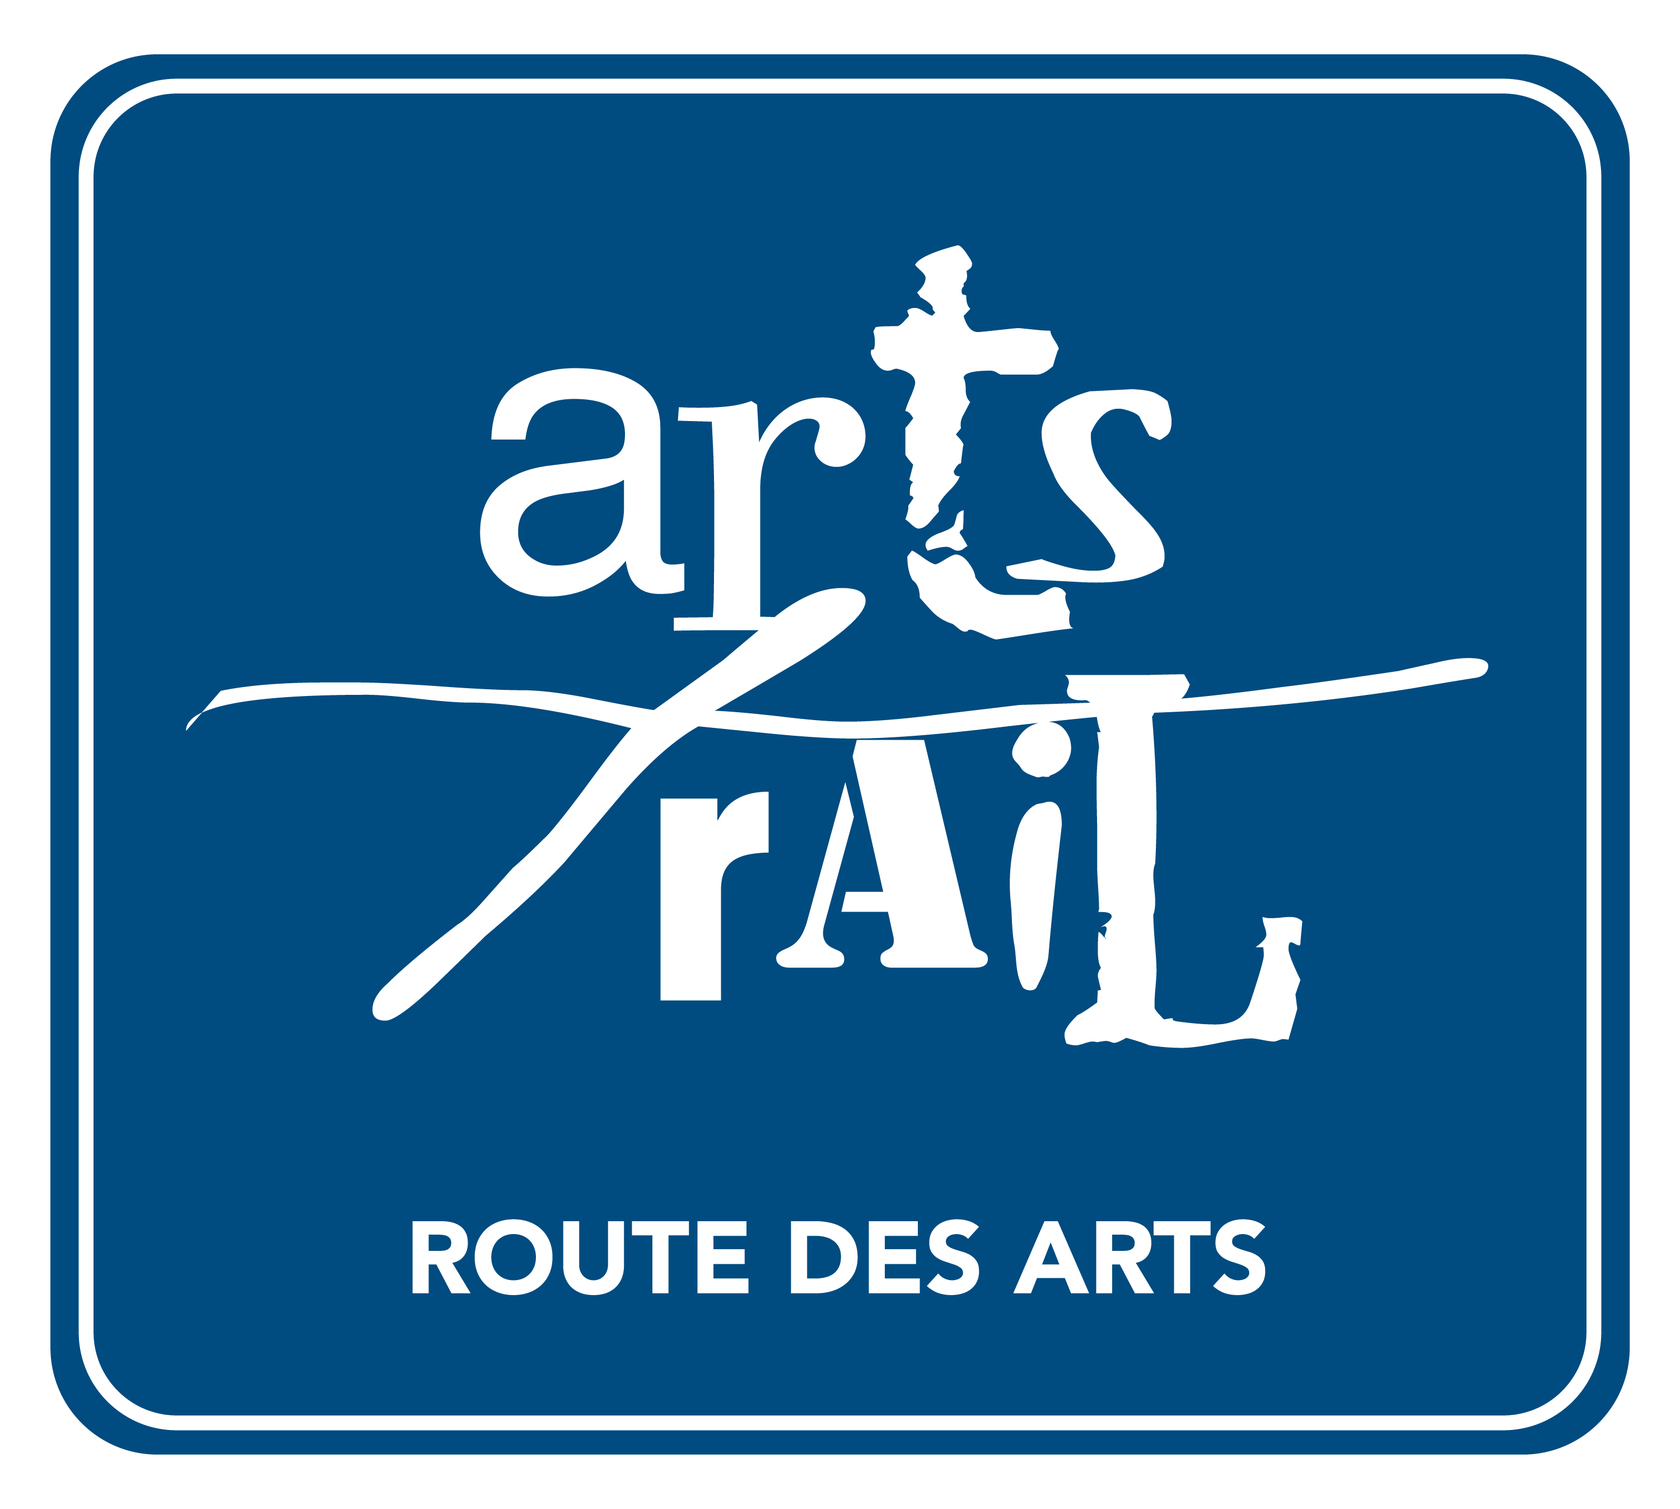 Arts Trail Guide